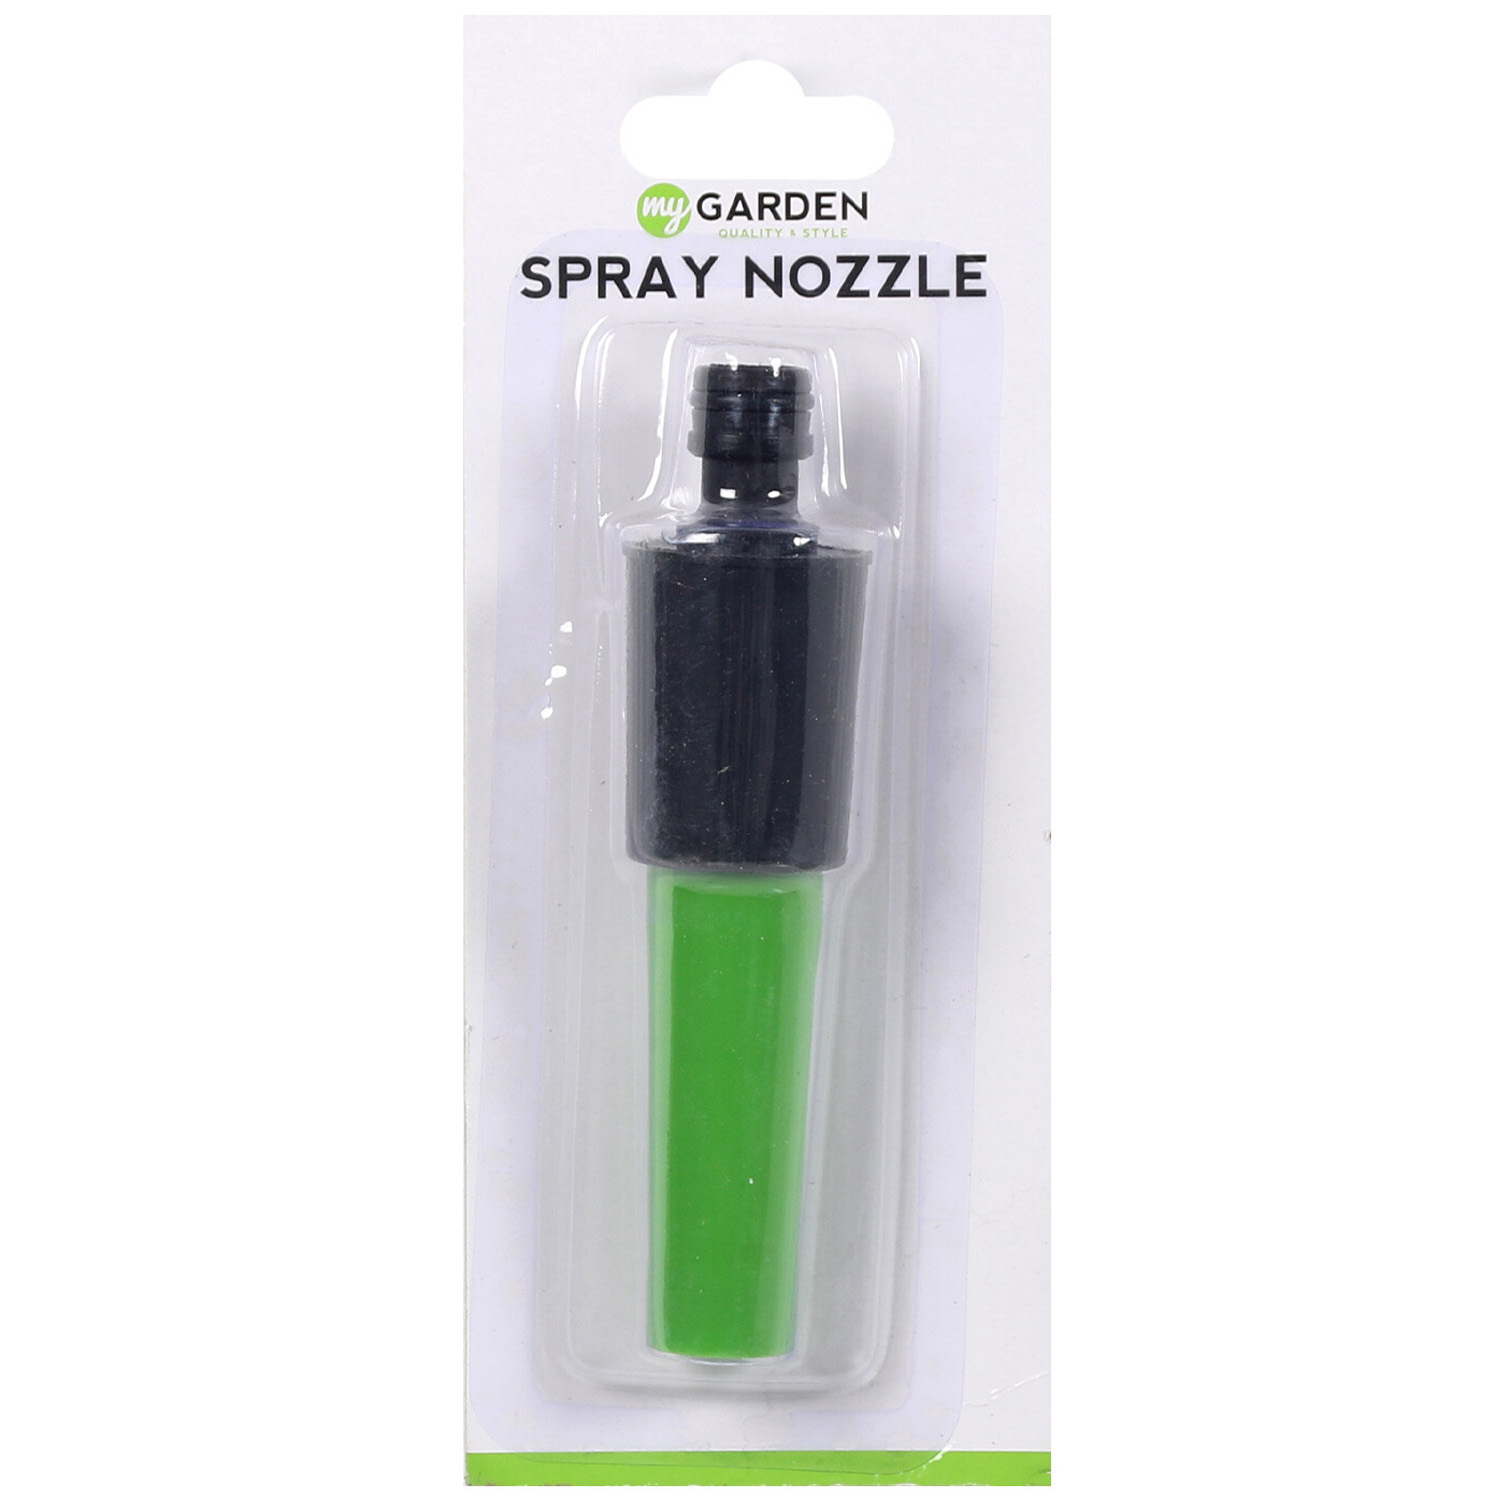 Snap On Garden Spray Nozzle Image